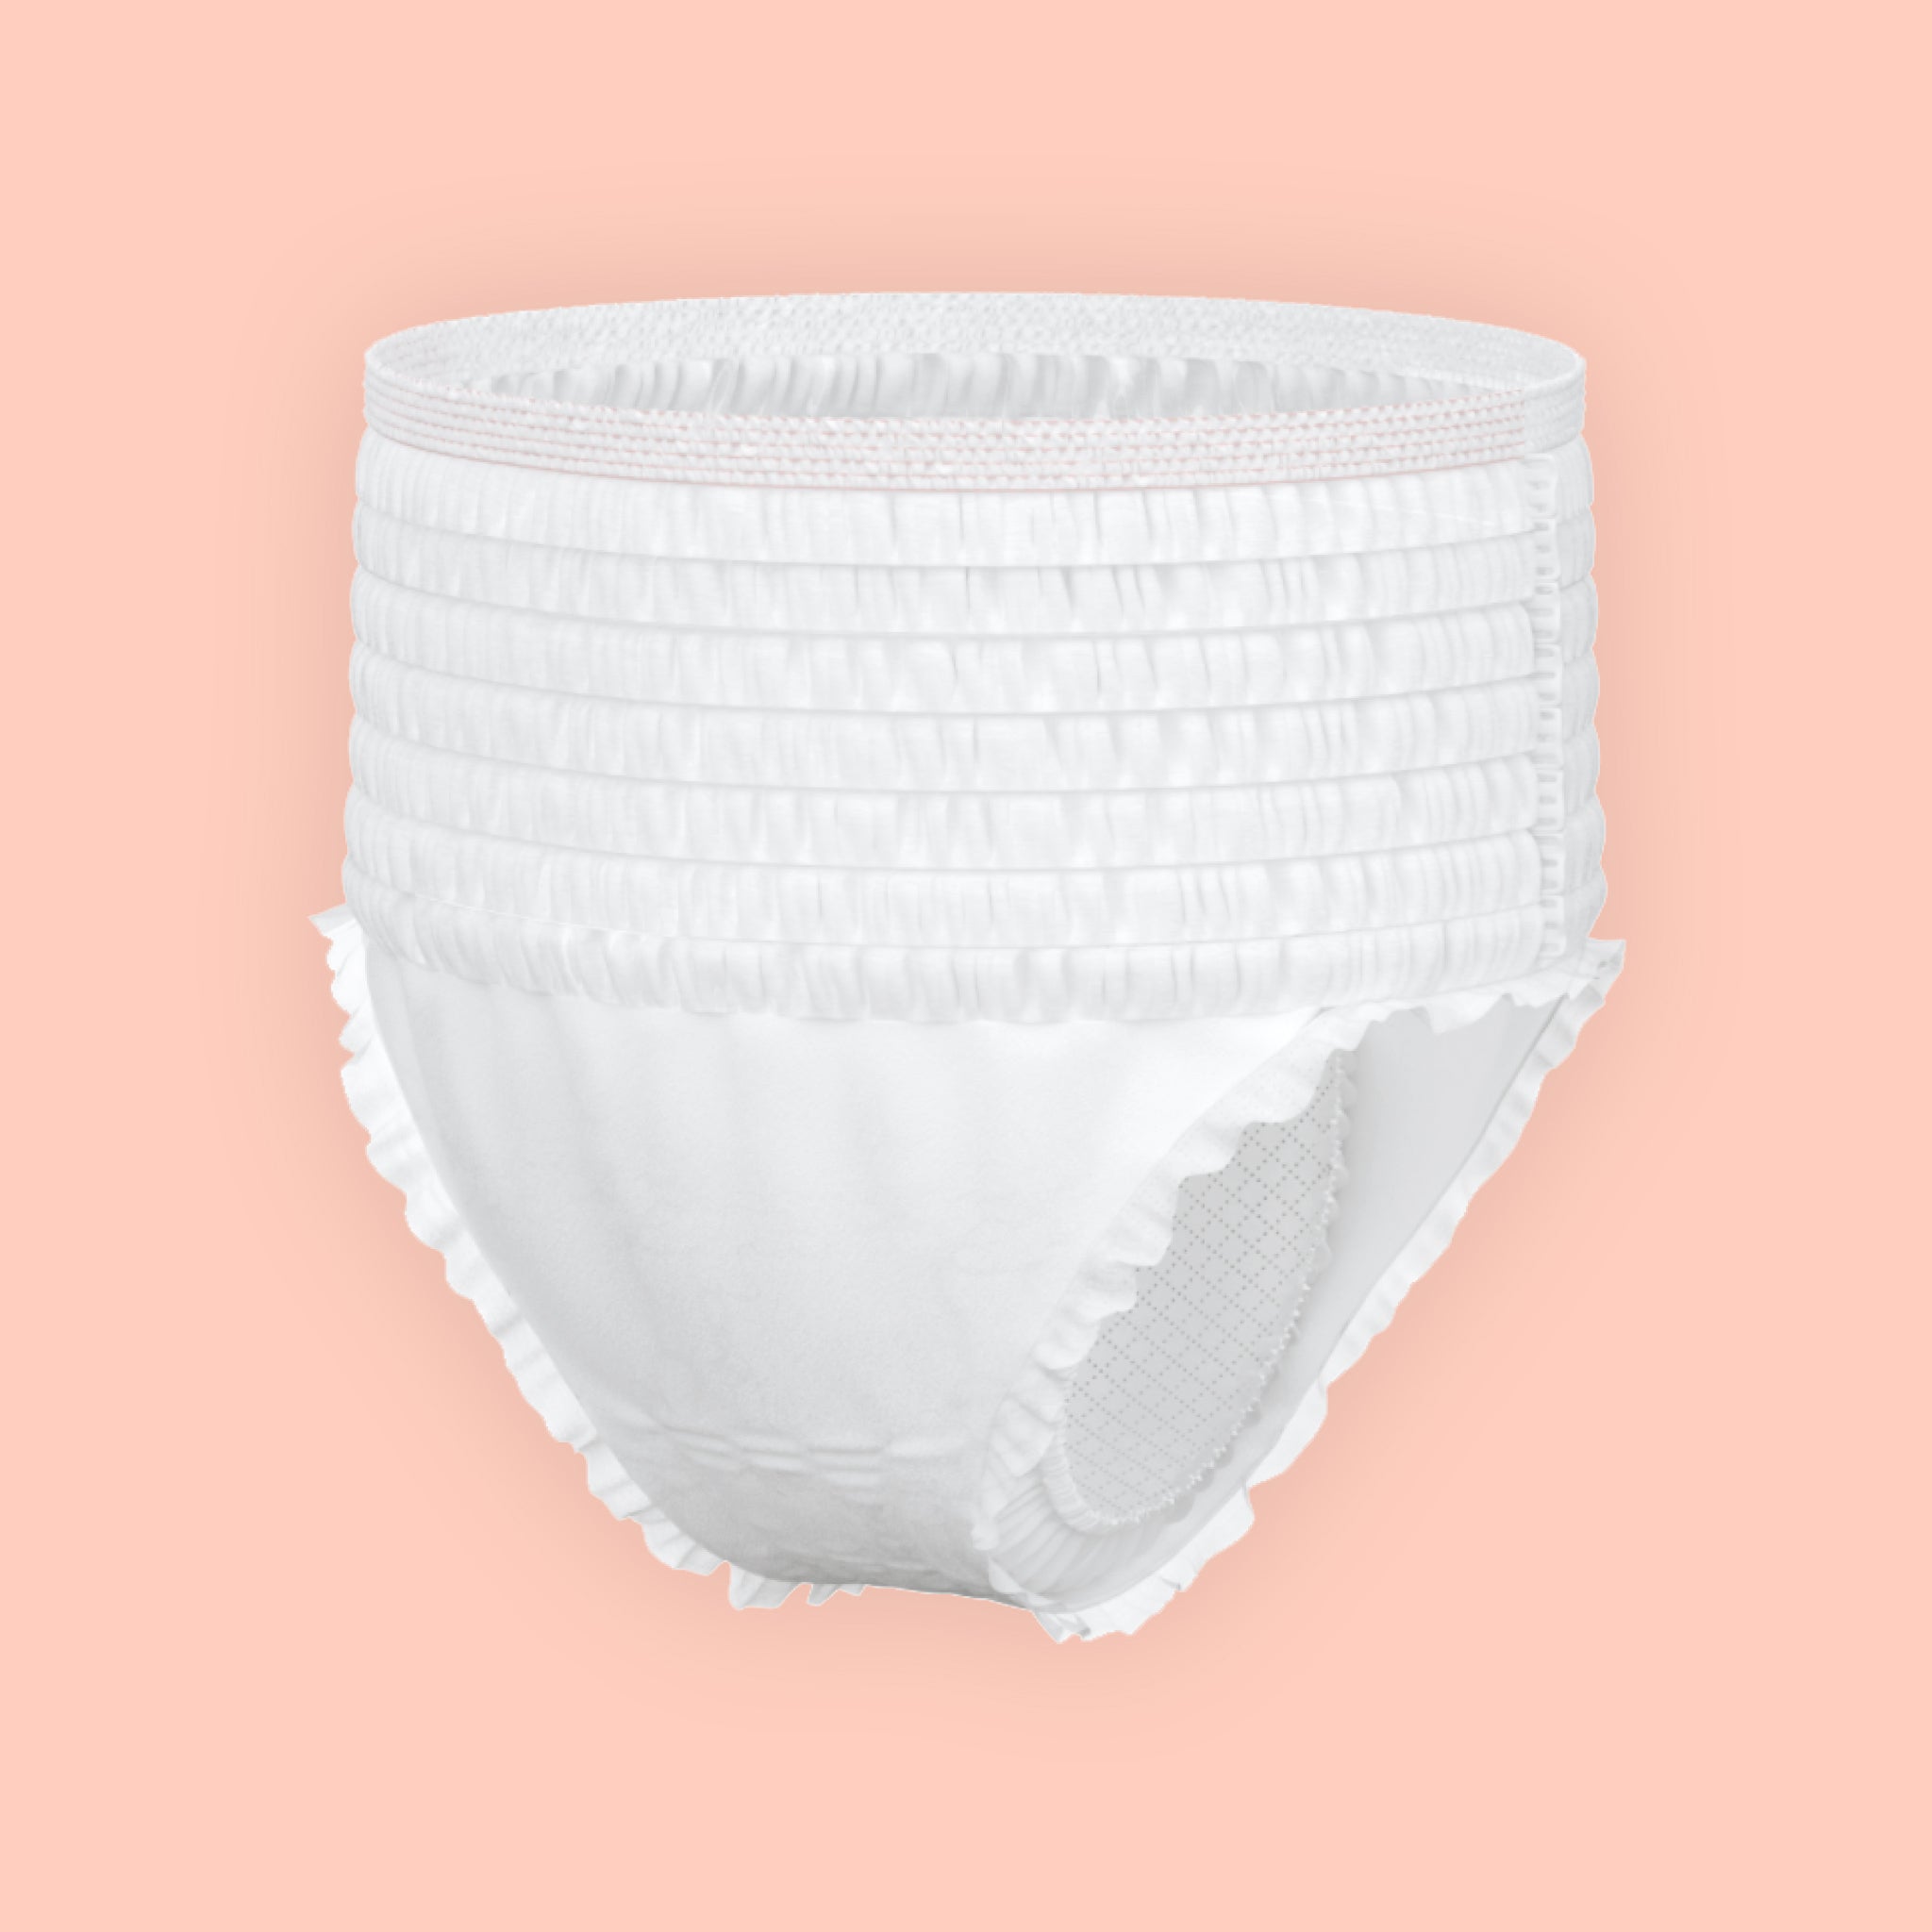 Rael Disposable Period Underwear L-XL - 8ct - Purple - 461